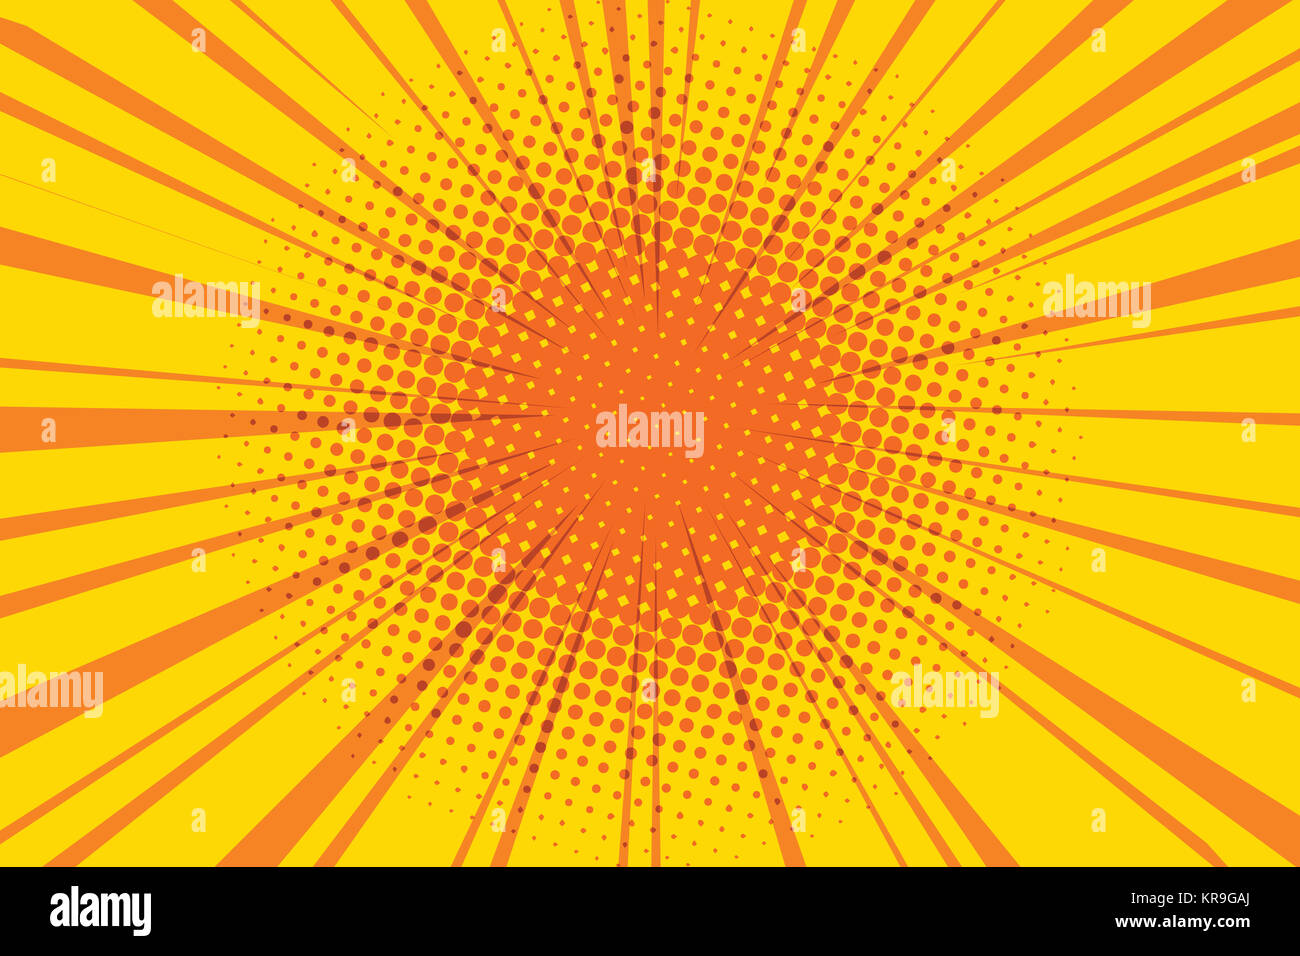 The sun comic book retro pop art background Stock Photo - Alamy